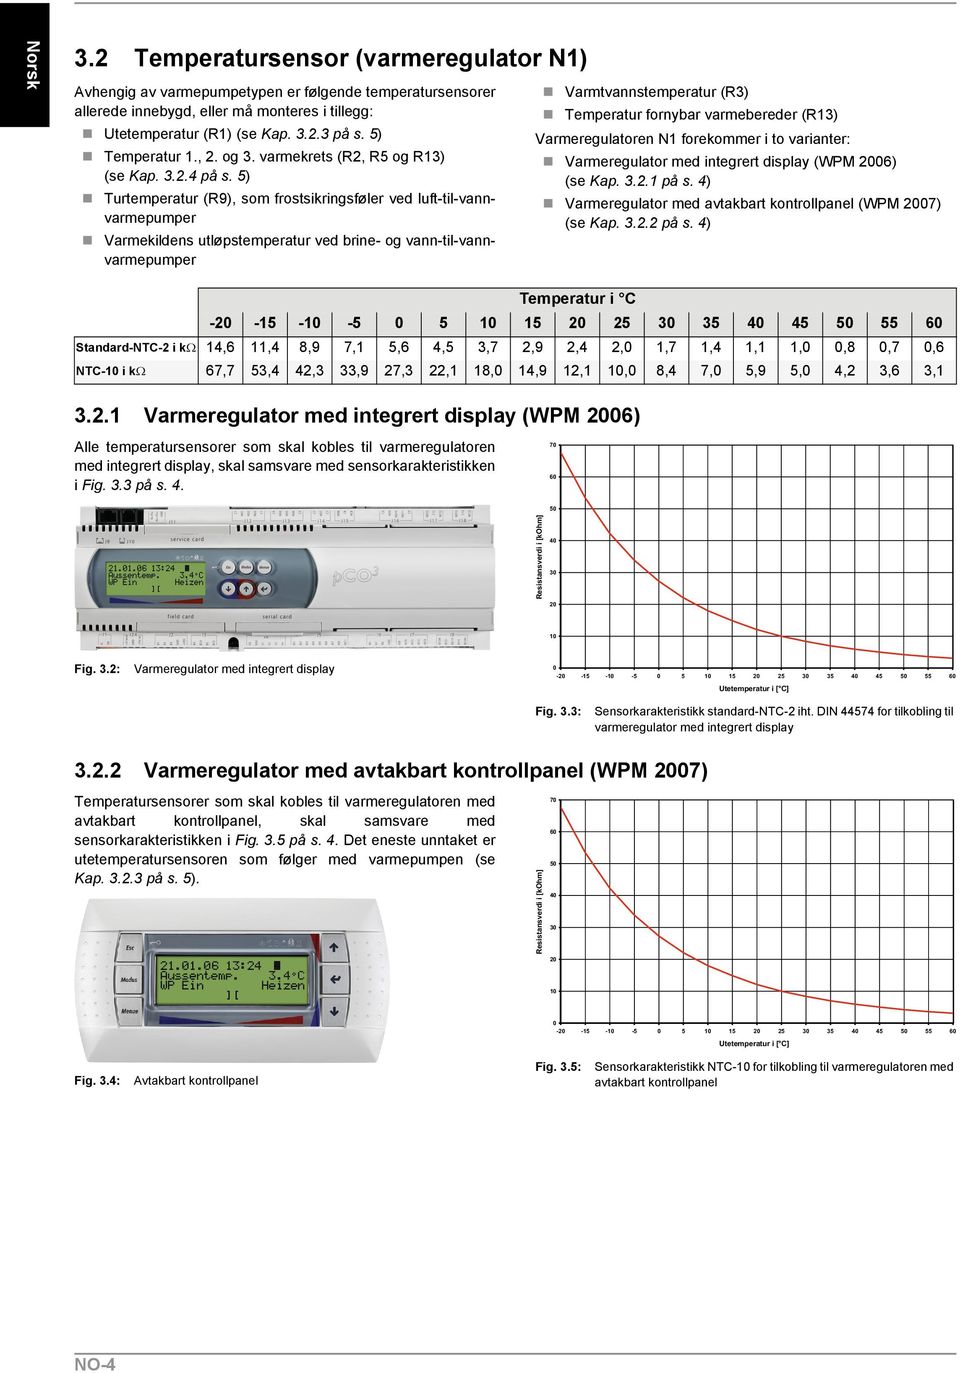 5) Varmeregulator med integrert display (WPM 2006) (se Kap. 3.2.1 på s.